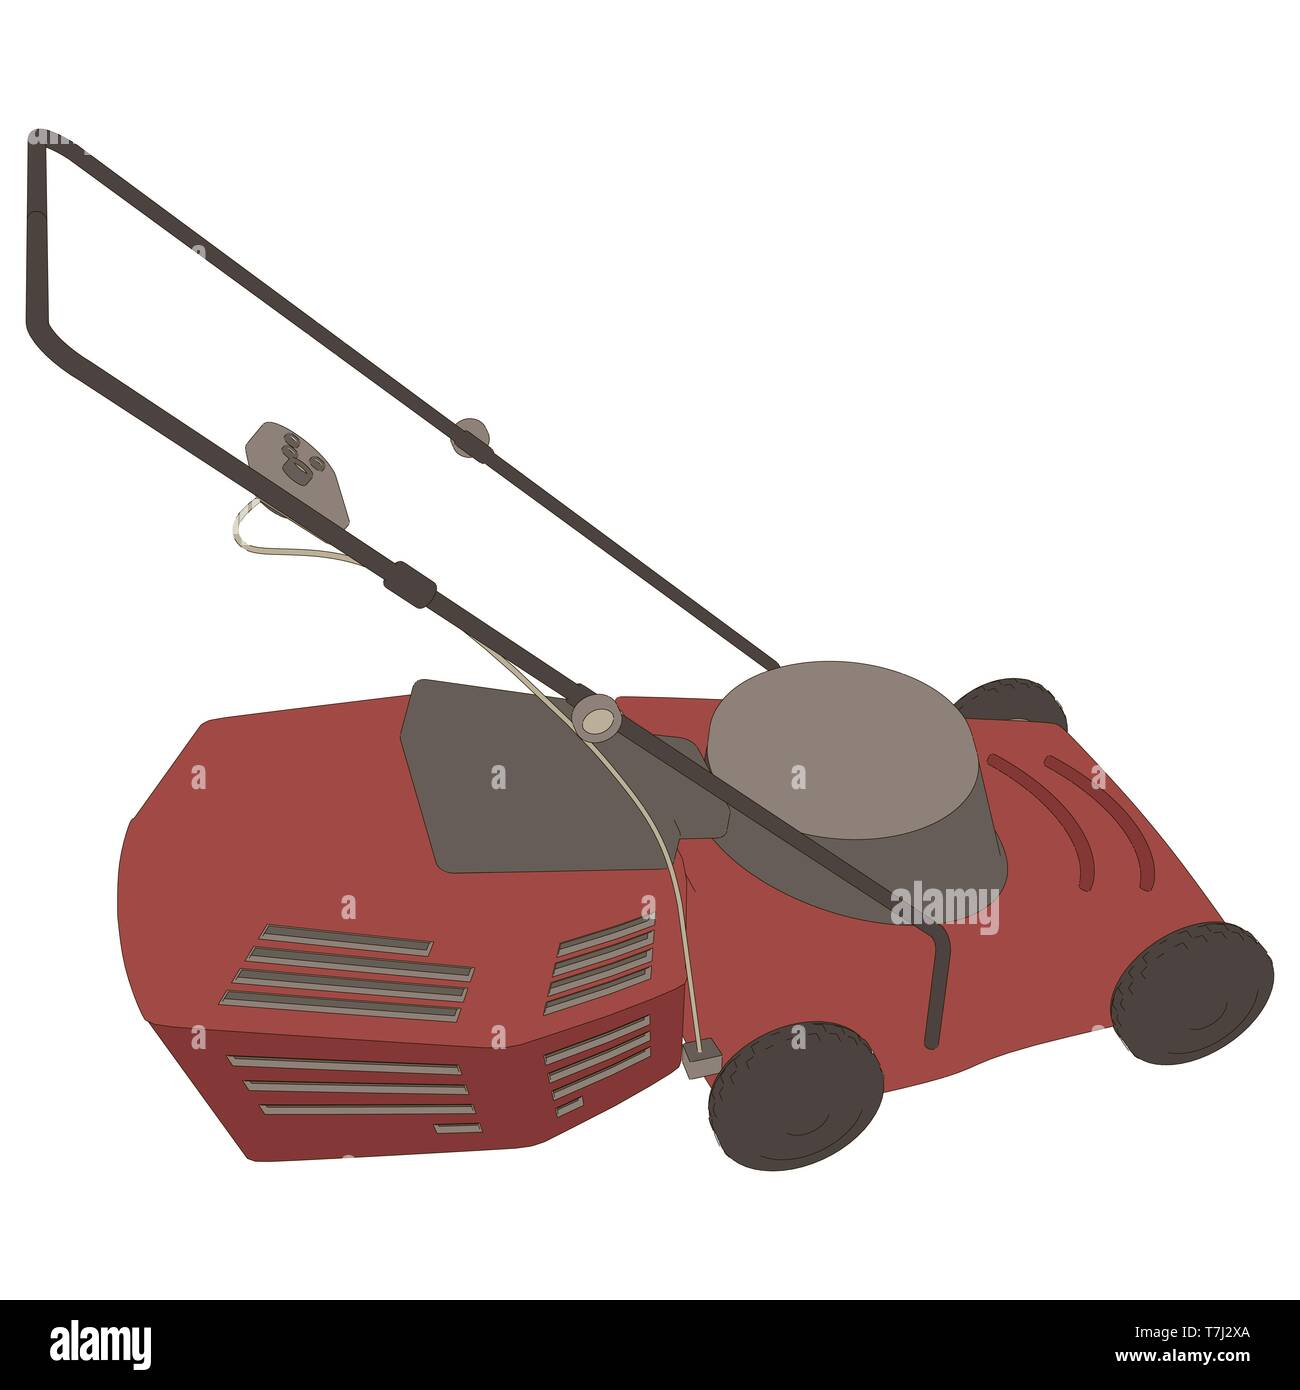 Lawn mower icon vector grass gardening mowing garden illustration equipment riding tool symbol Stock Vector